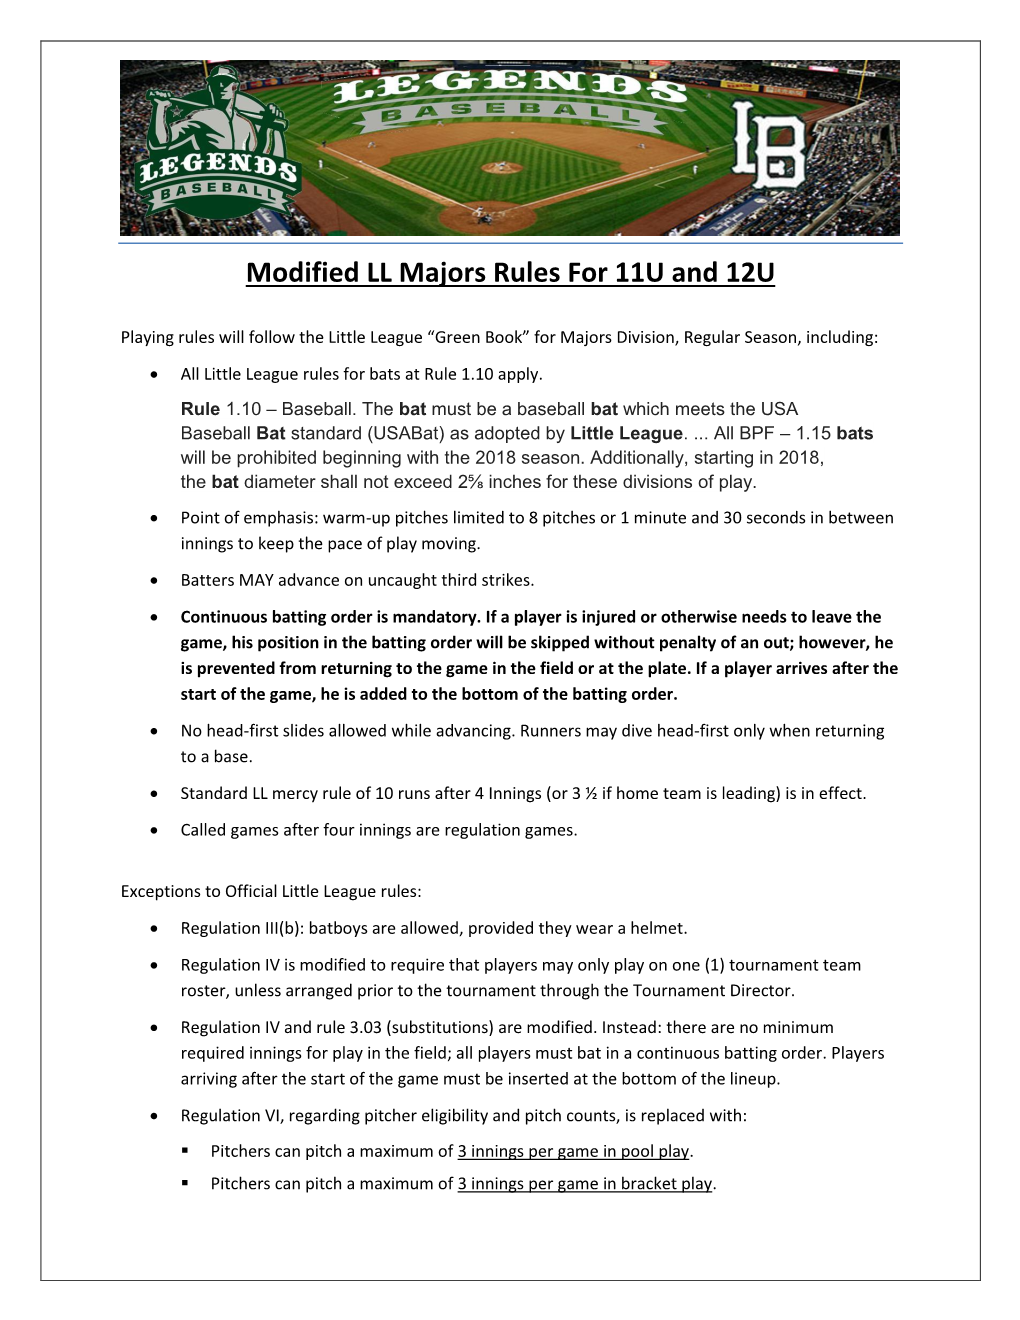 Modified LL Majors Rules for 11U and 12U